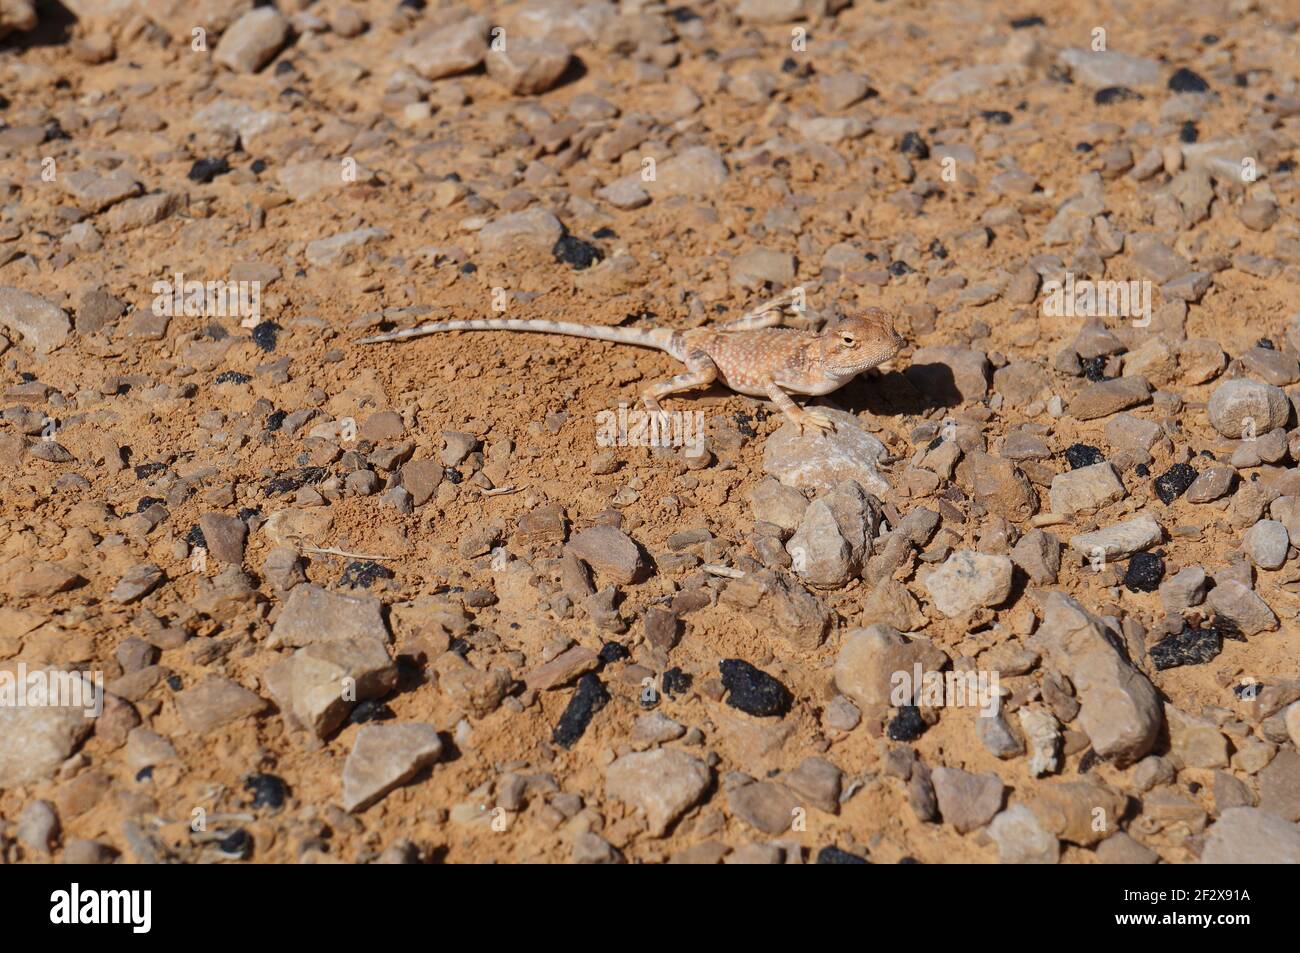 Desert Agama Trapelus Pallidus runs in the sand Stock Photo